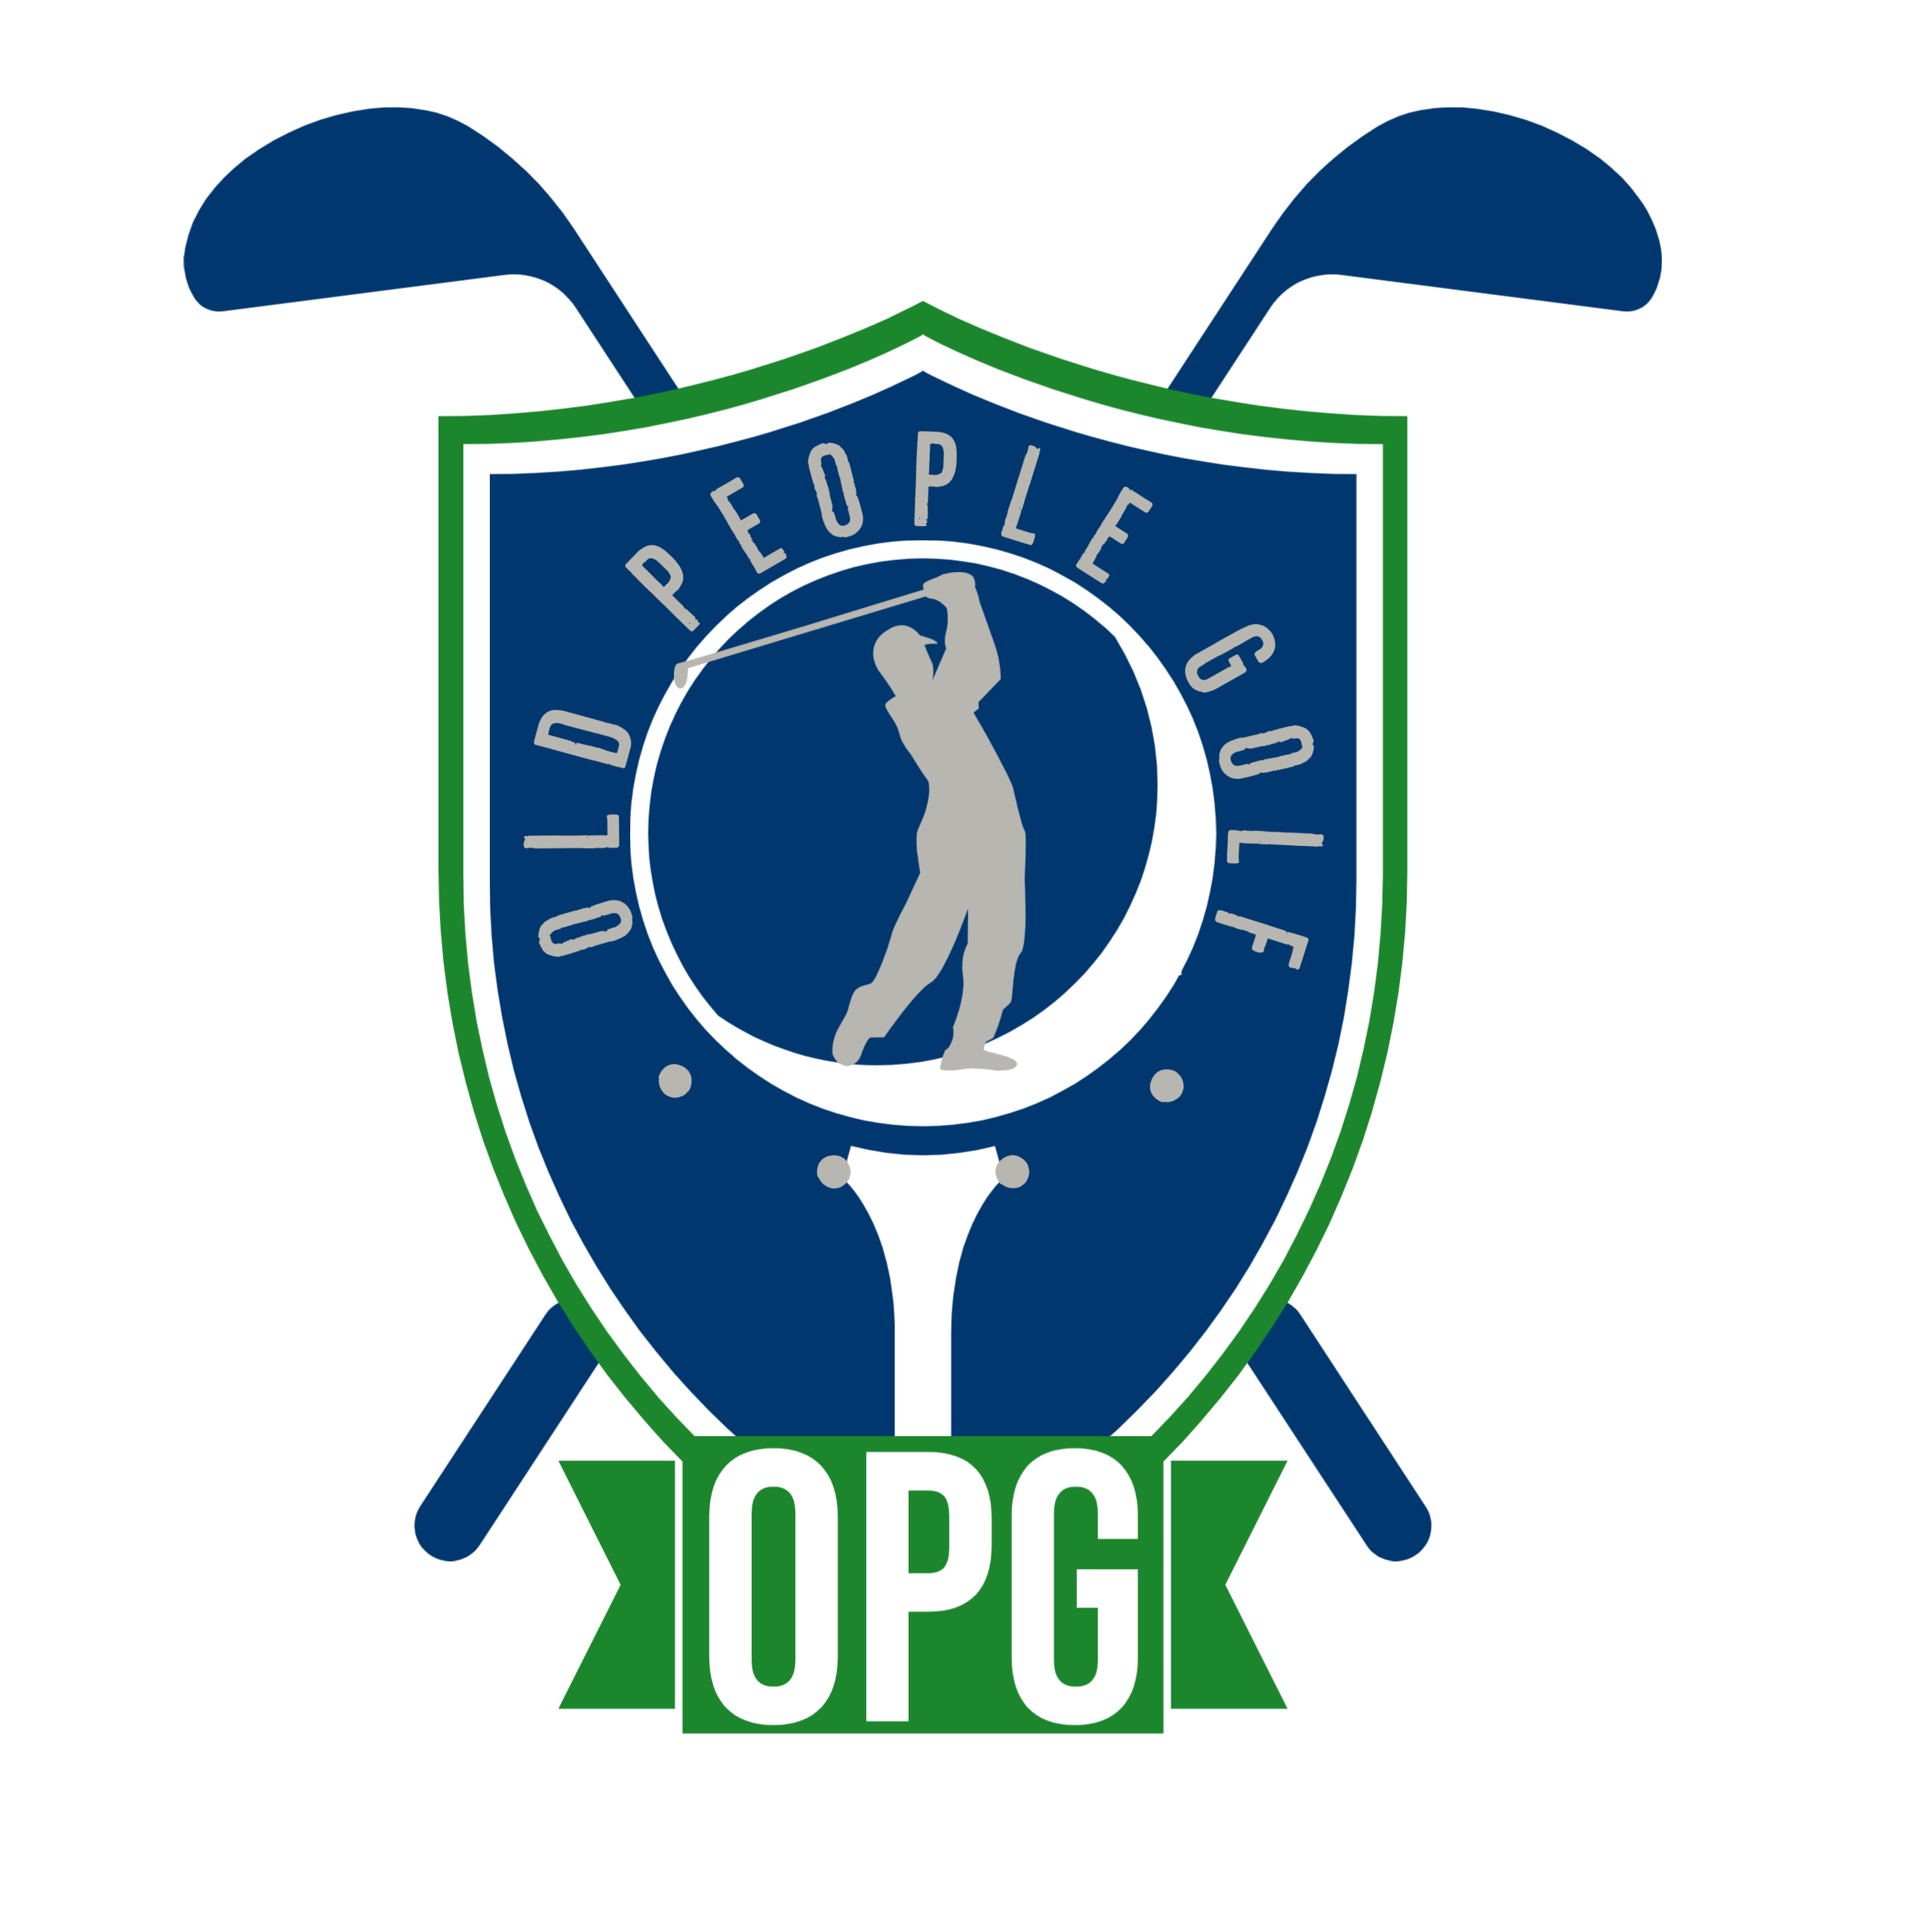 OPG logo 2 (2).png